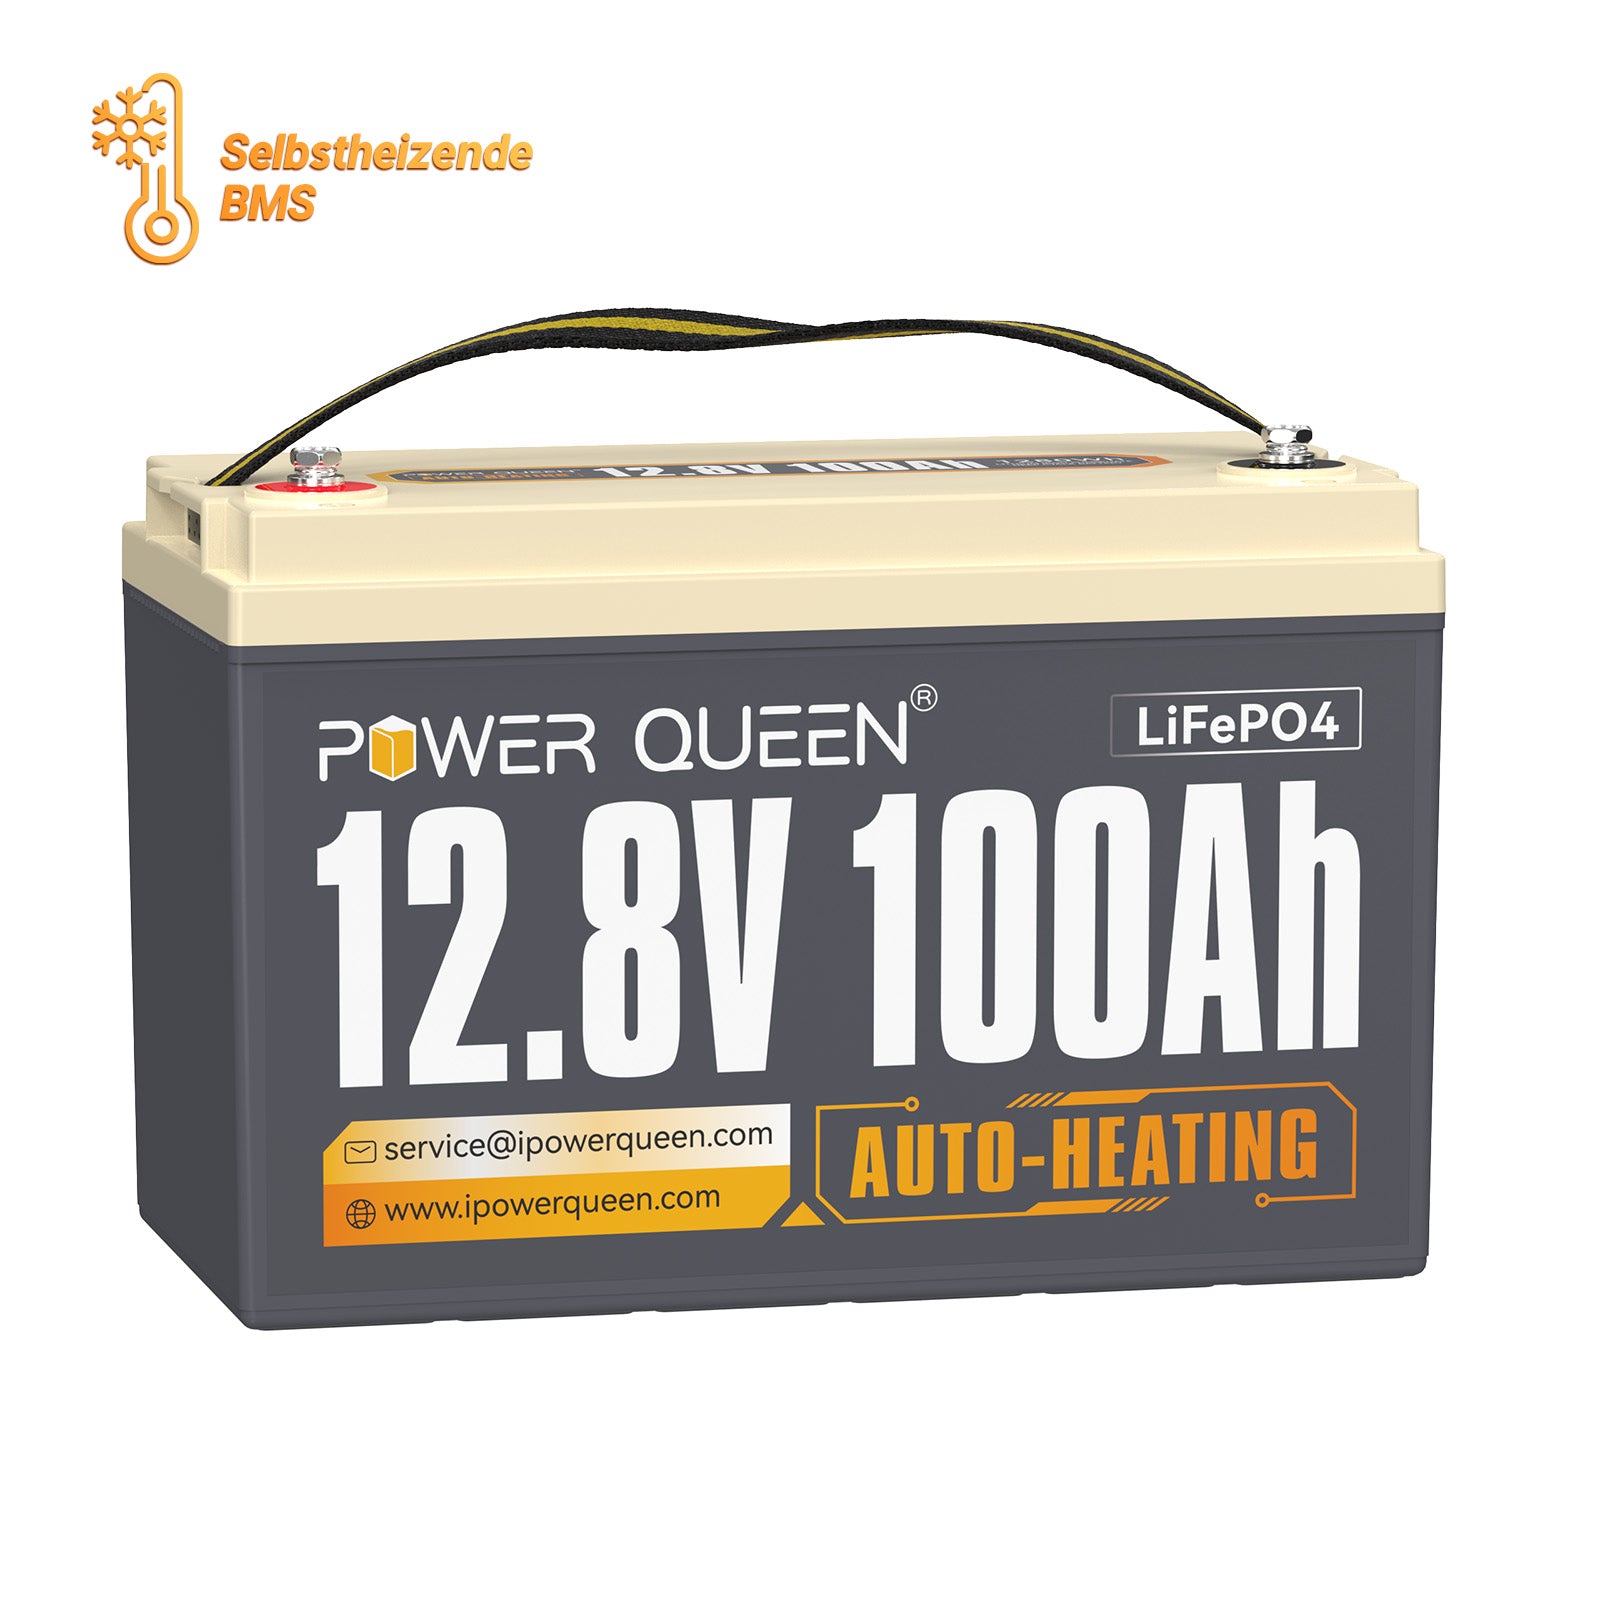 Batterie LiFePO4 auto-chauffante Power Queen 12,8 V 100 Ah, BMS 100 A intégré